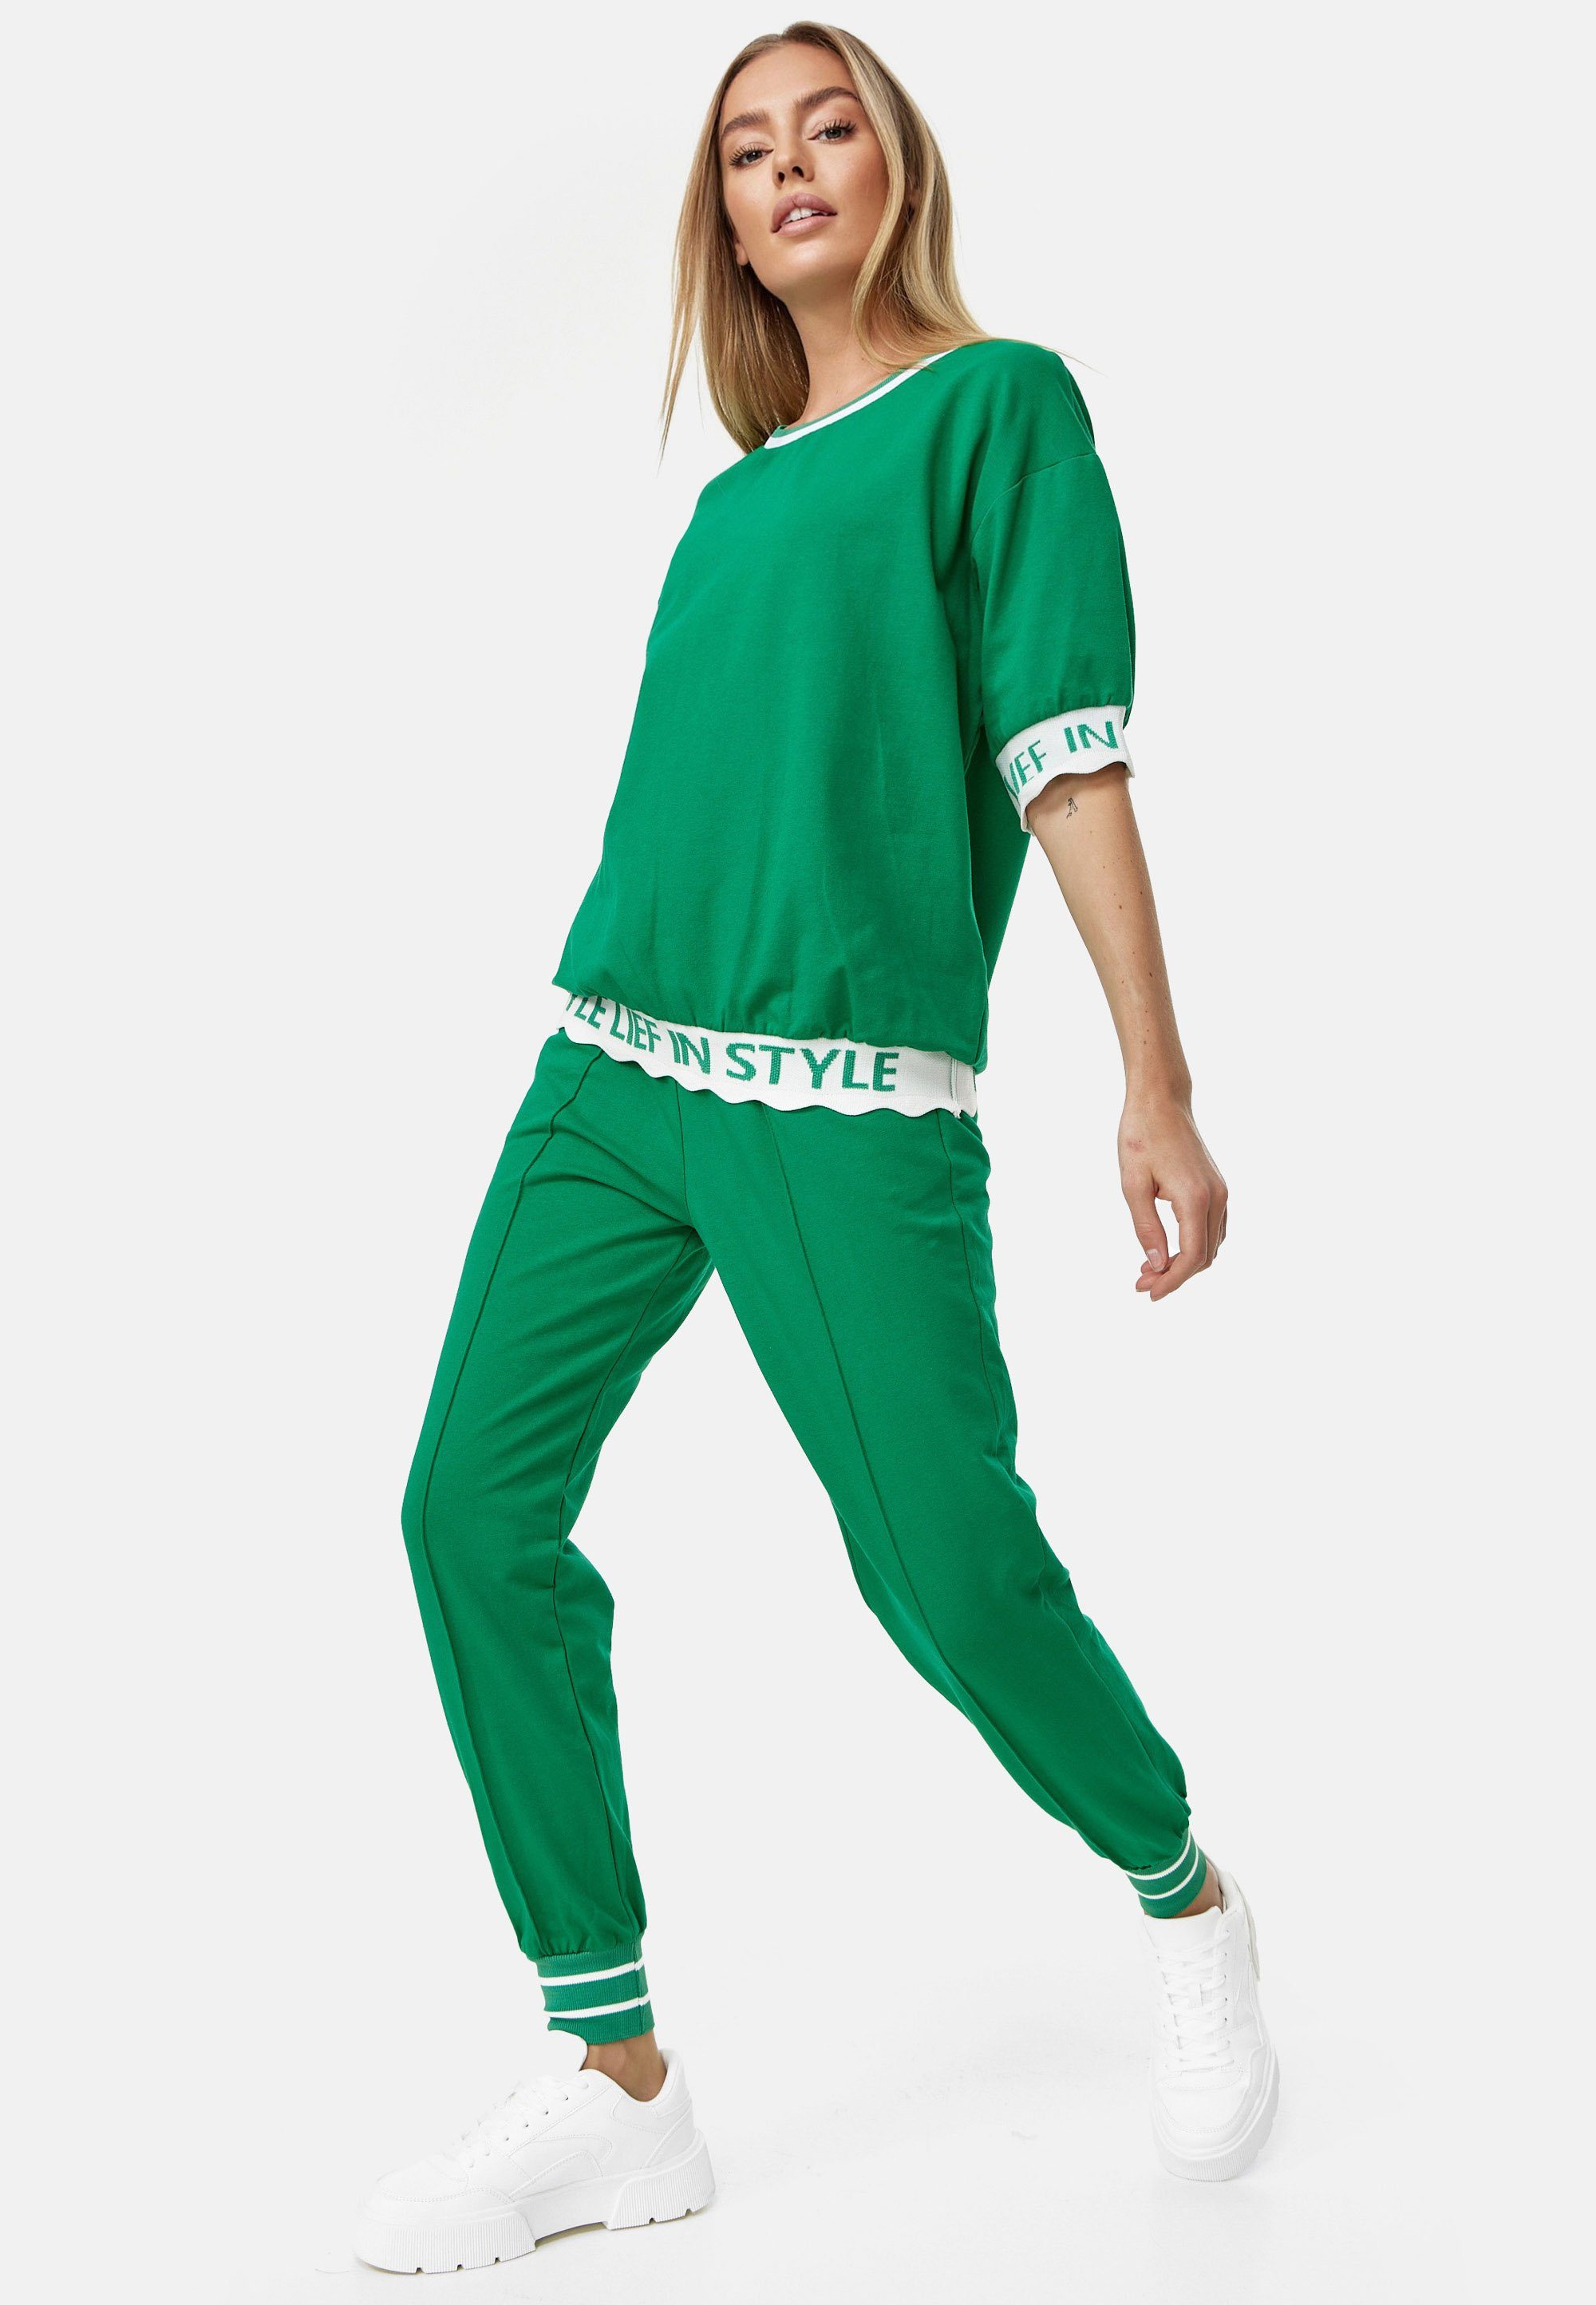 stylishem T-Shirt Schriftzug grün Decay mit